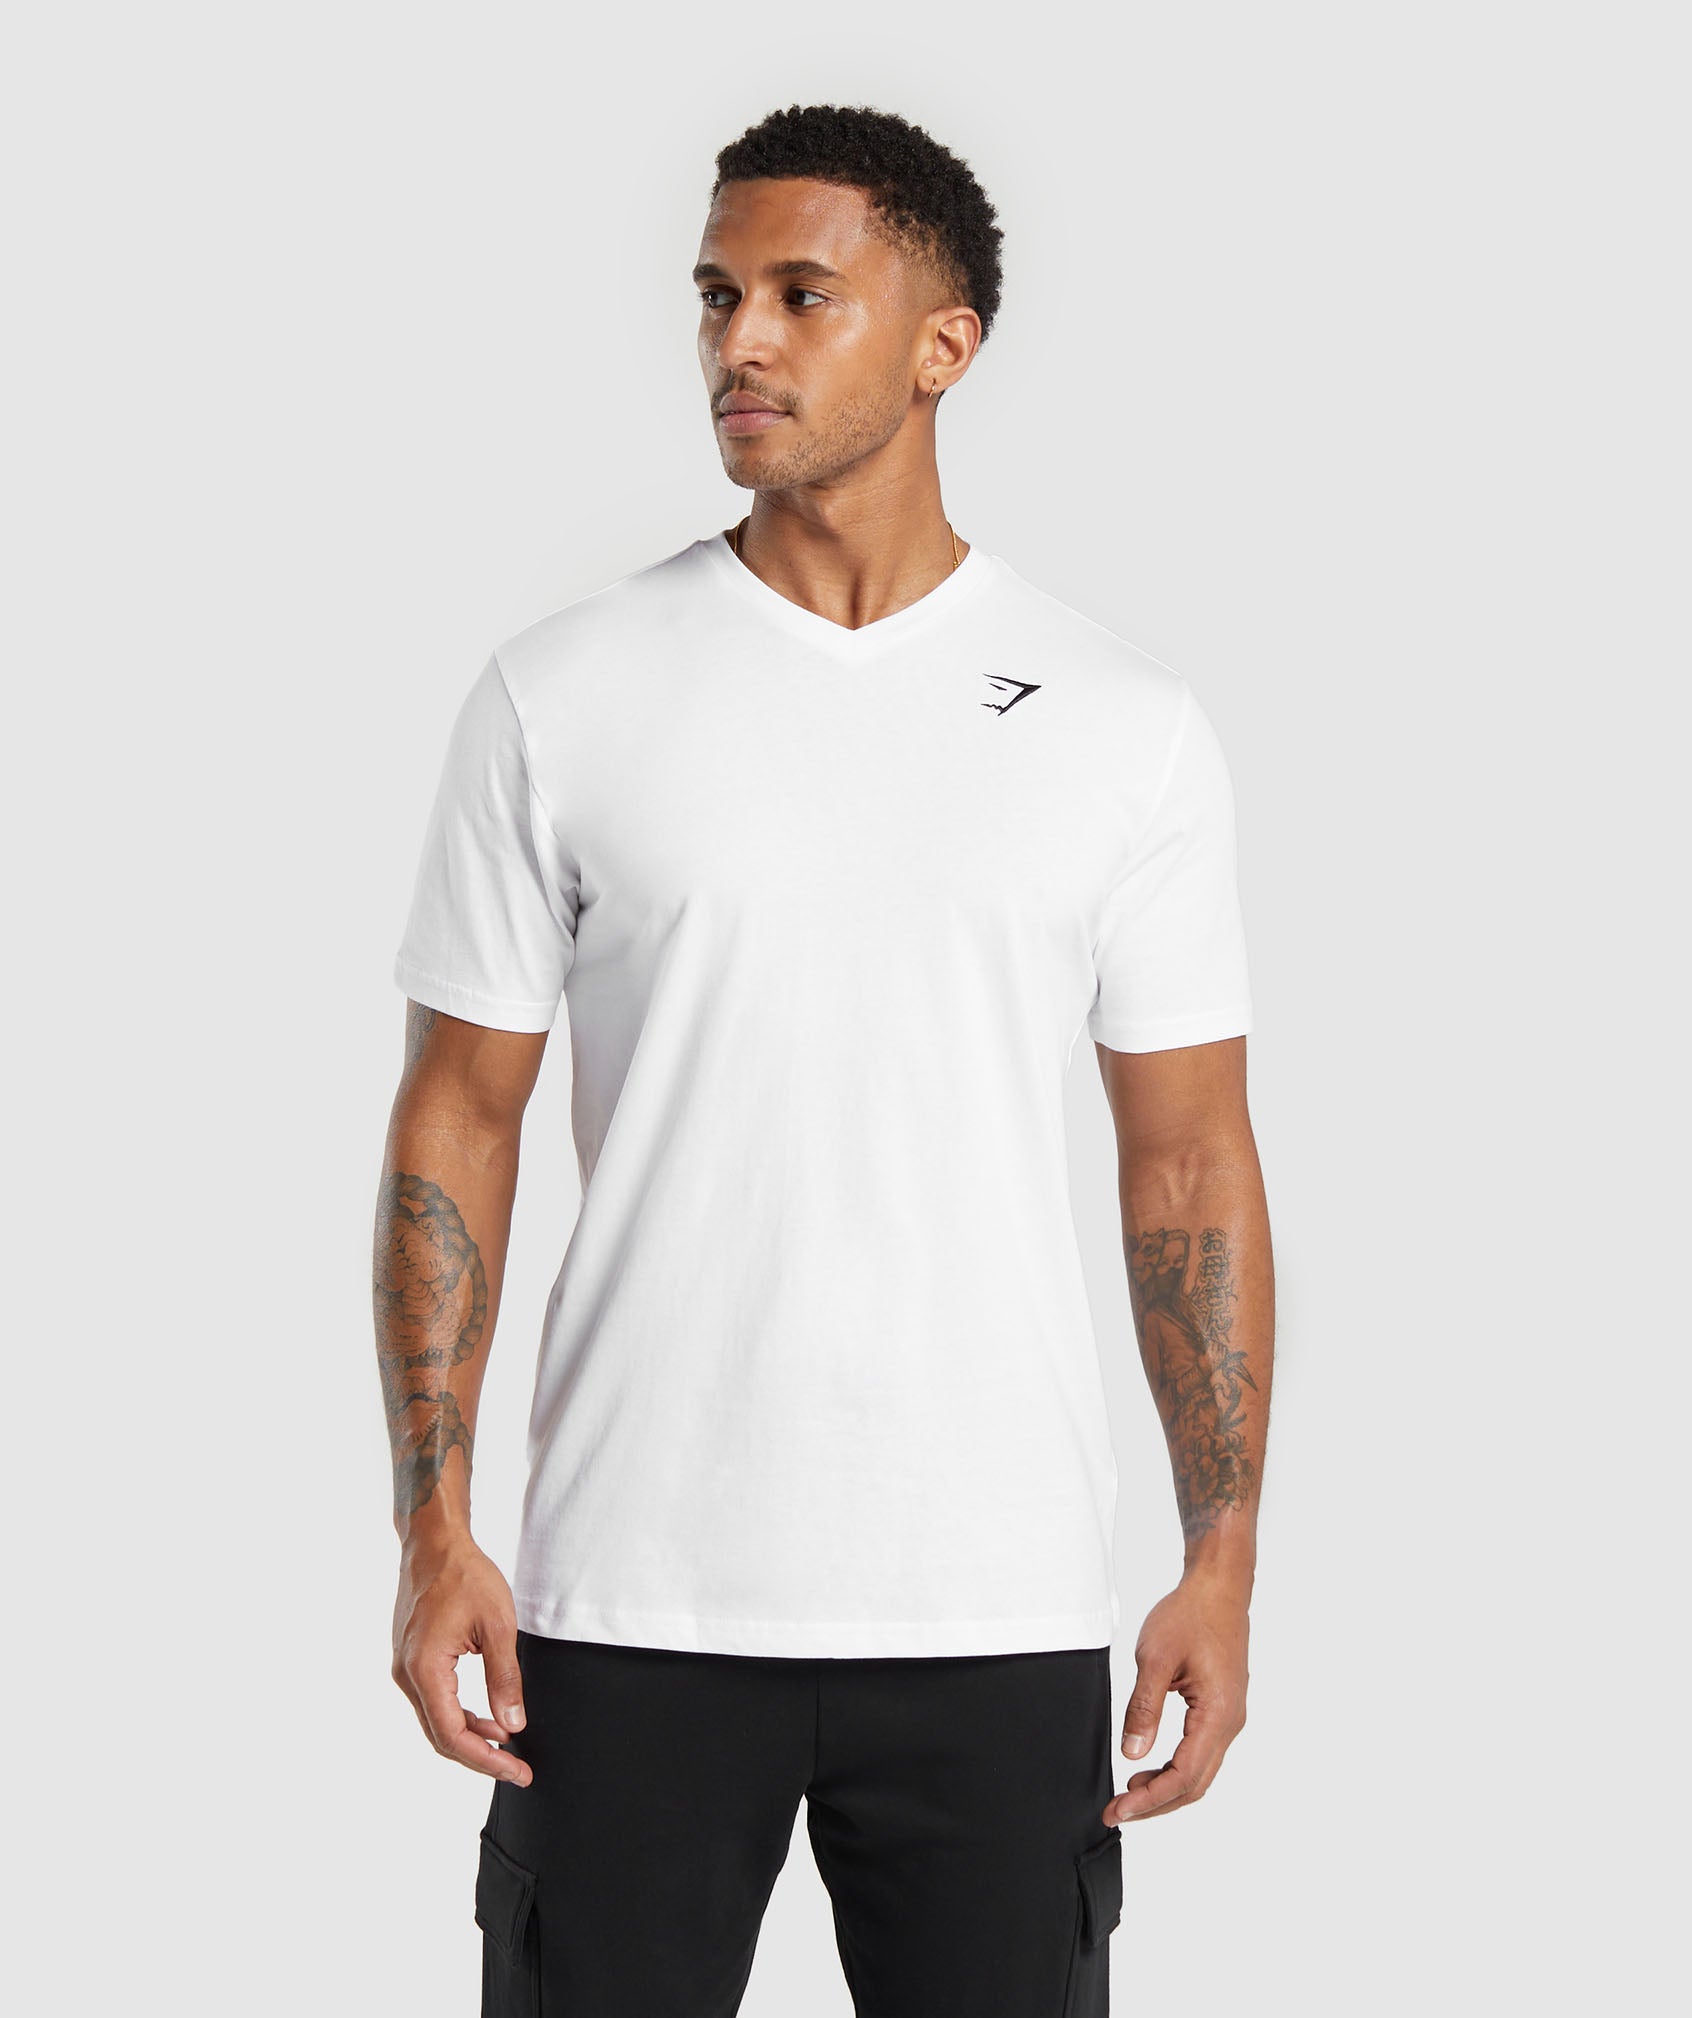 Crest V-Neck T Shirt in White - view 1